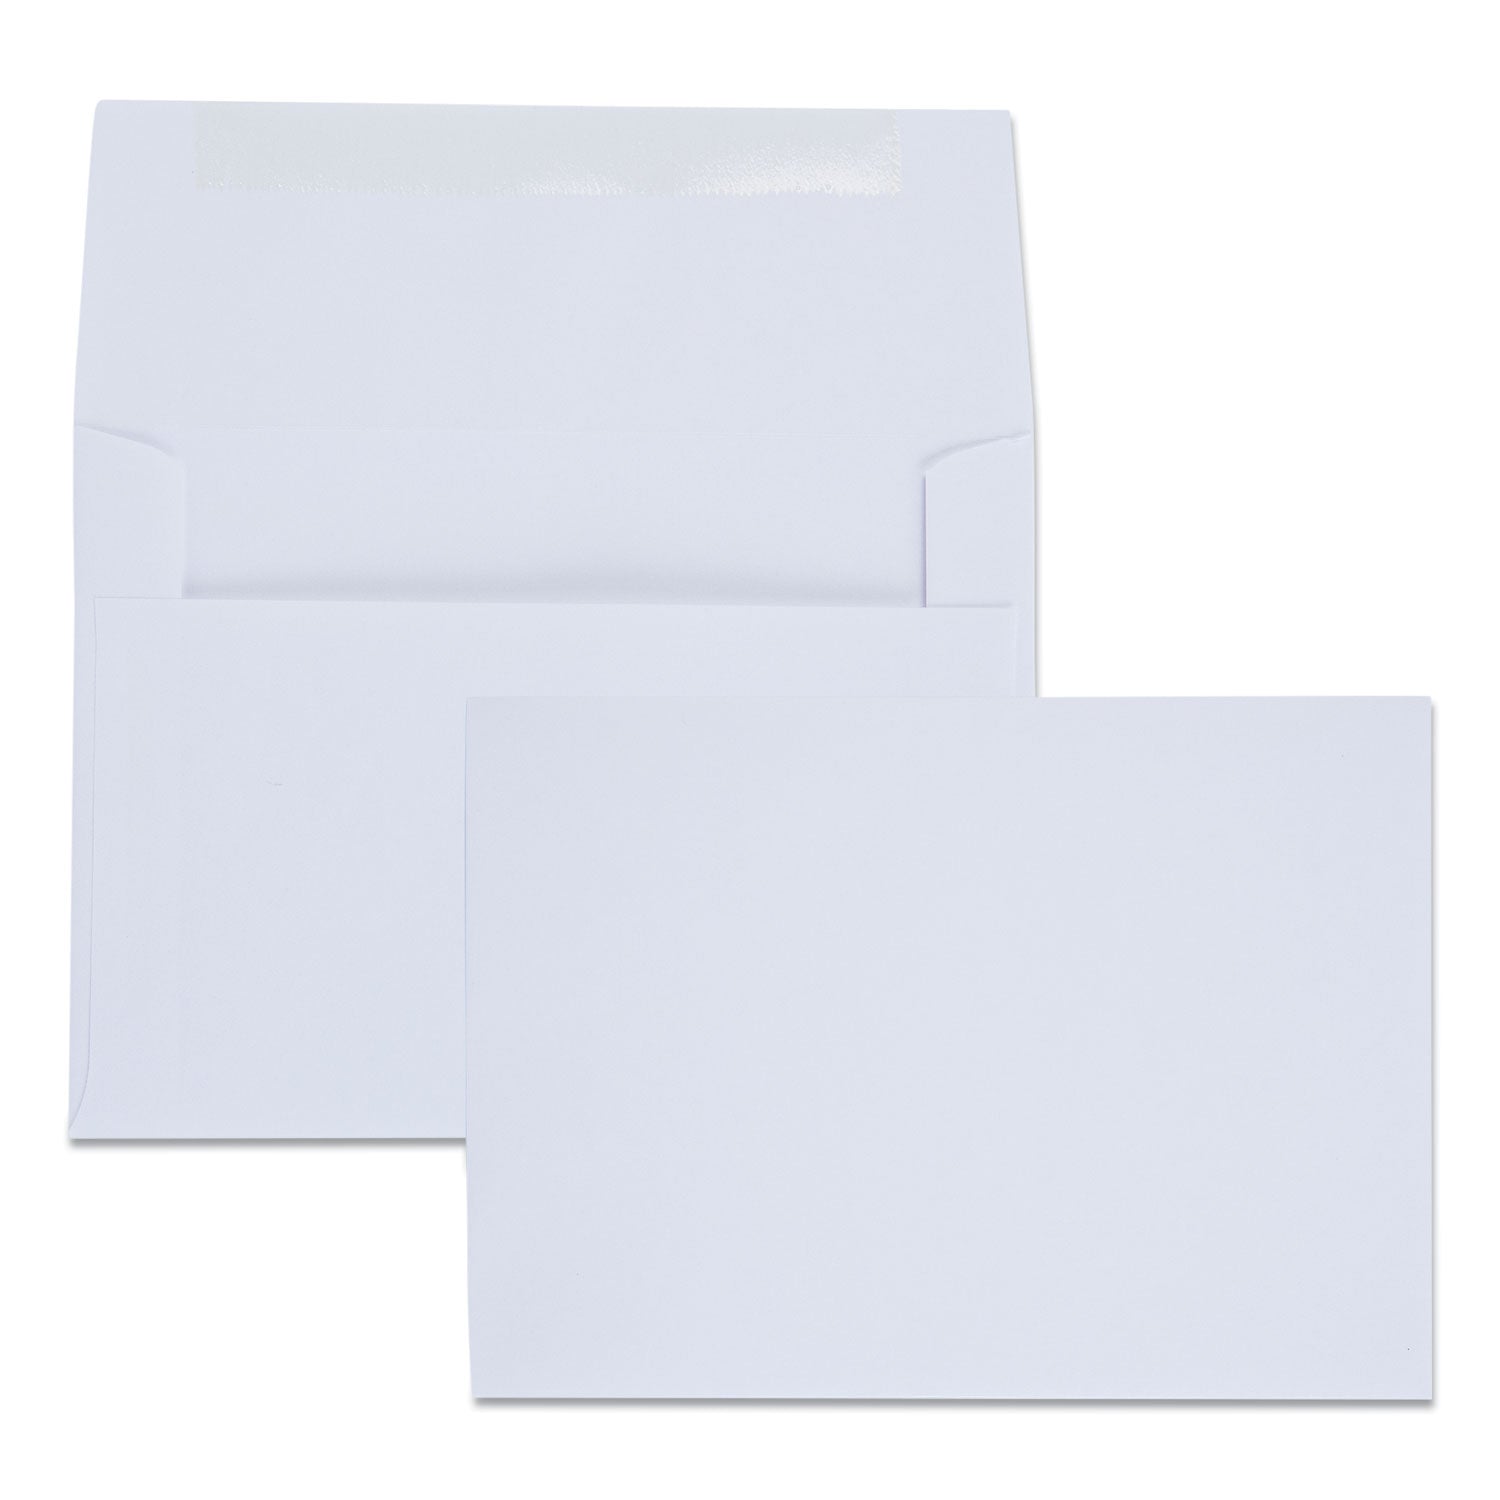 Greeting Card/Invitation Envelope, A-6, Square Flap, Gummed Closure, 4.75 x 6.5, White, 100/Box - 